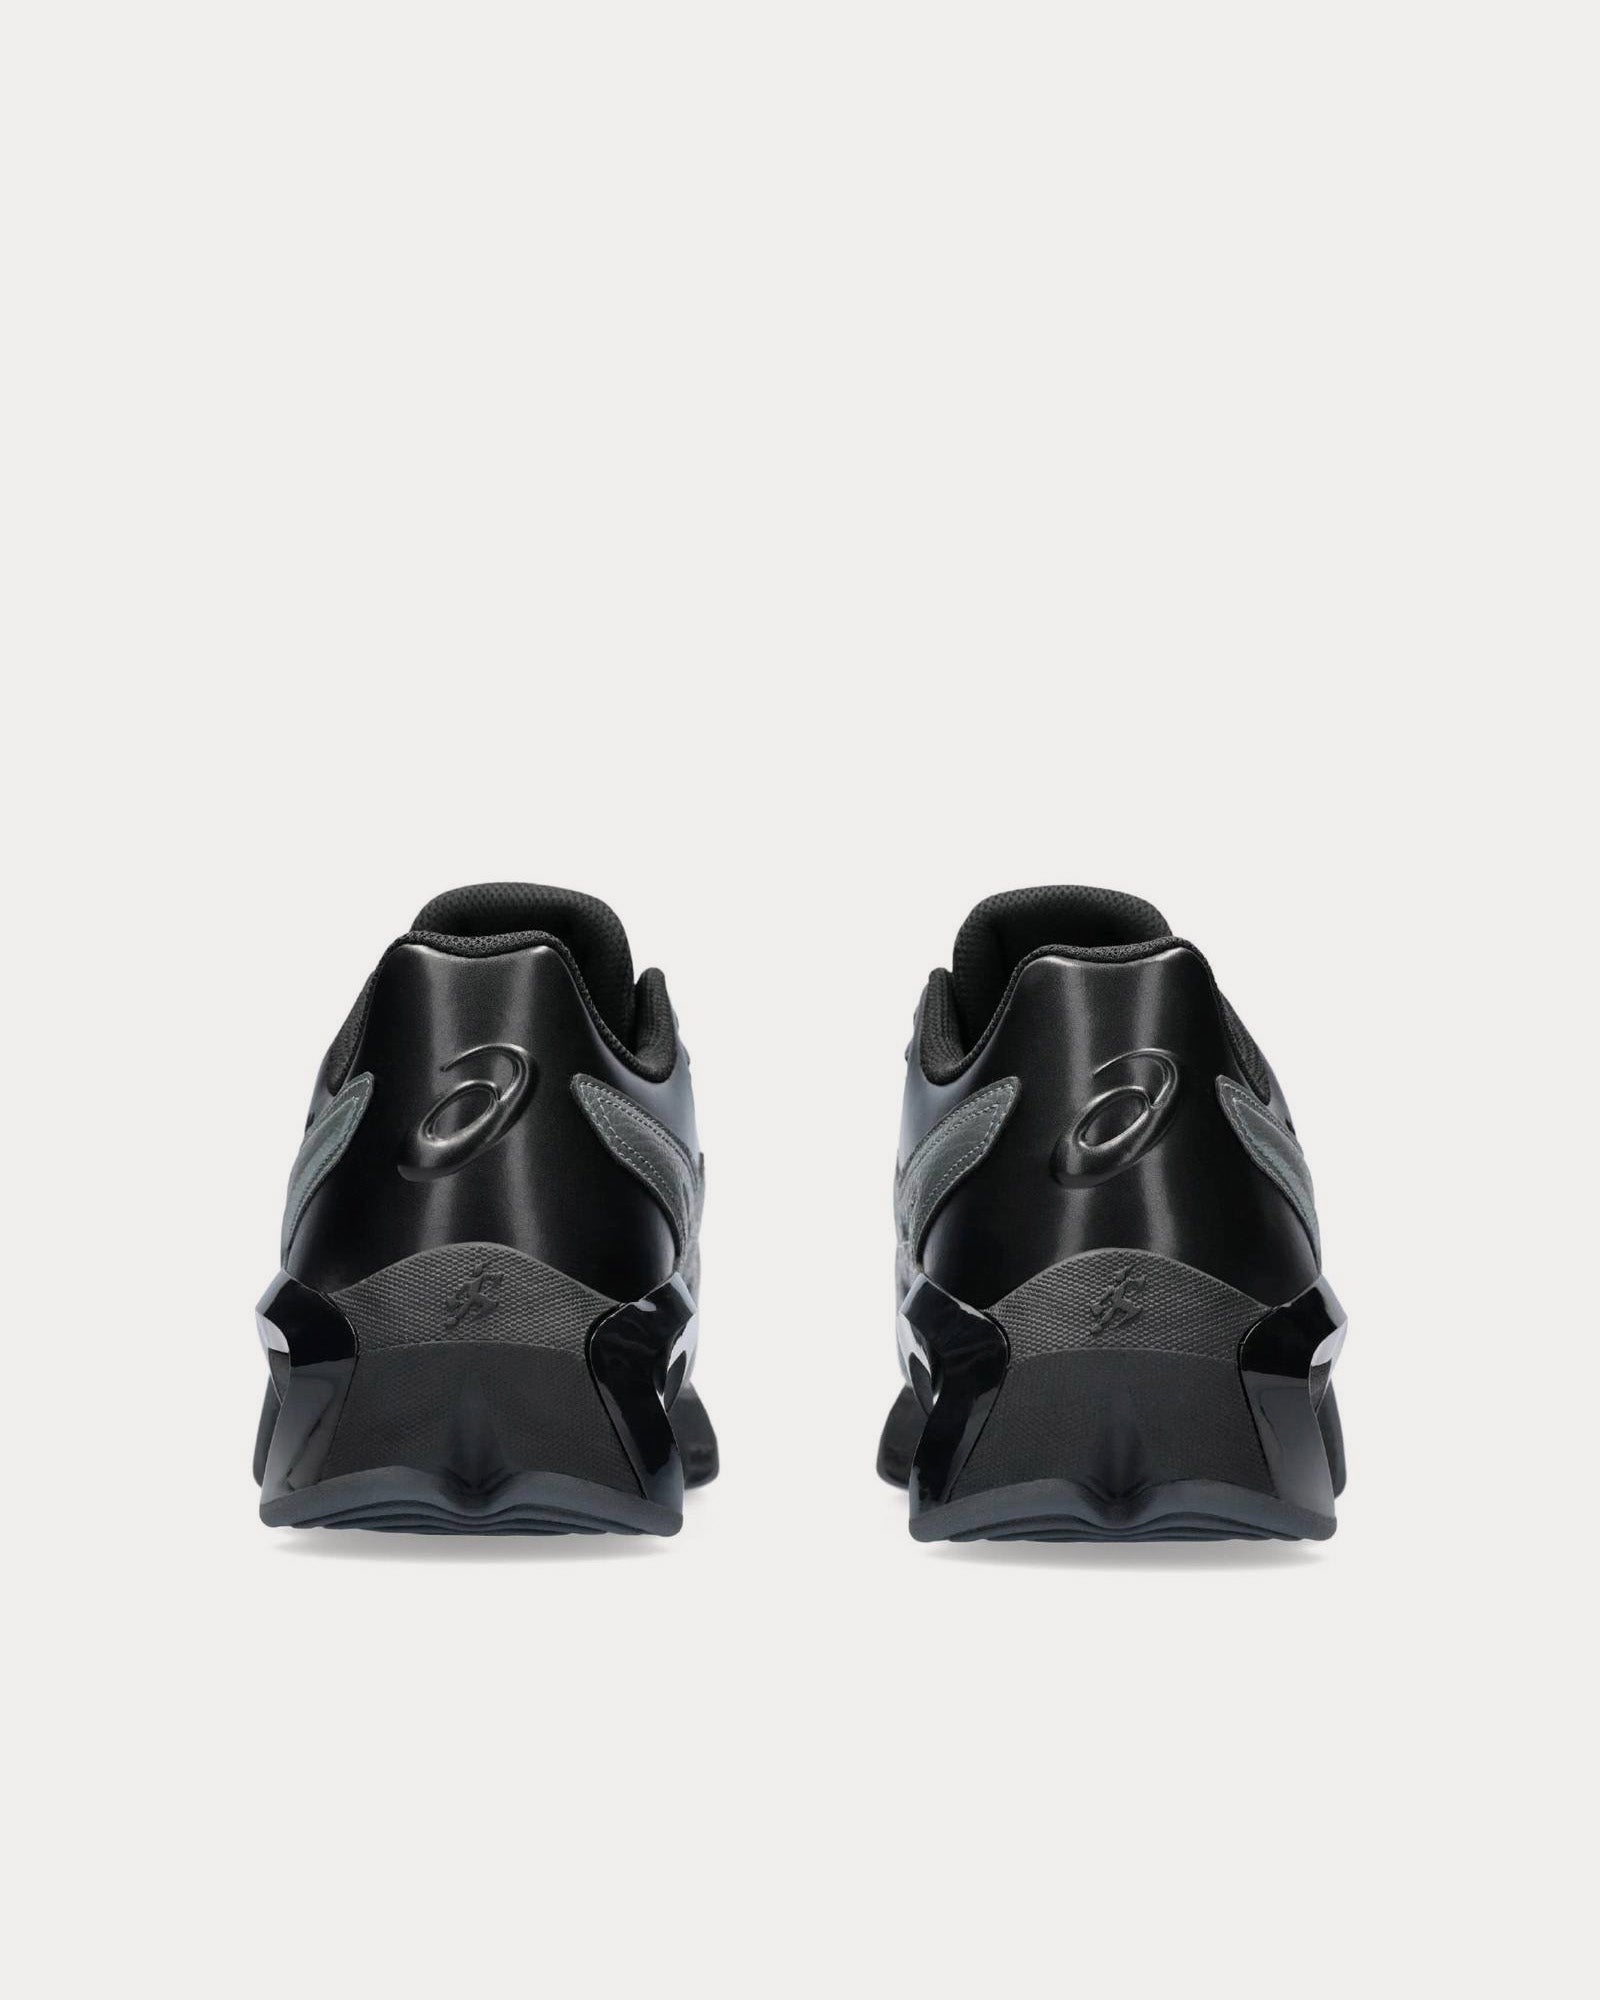 Asics x Kiko Kostadinov - Gel-Teremoa Novalis Obsidian Black / Smoke Shadow Low Top Sneakers